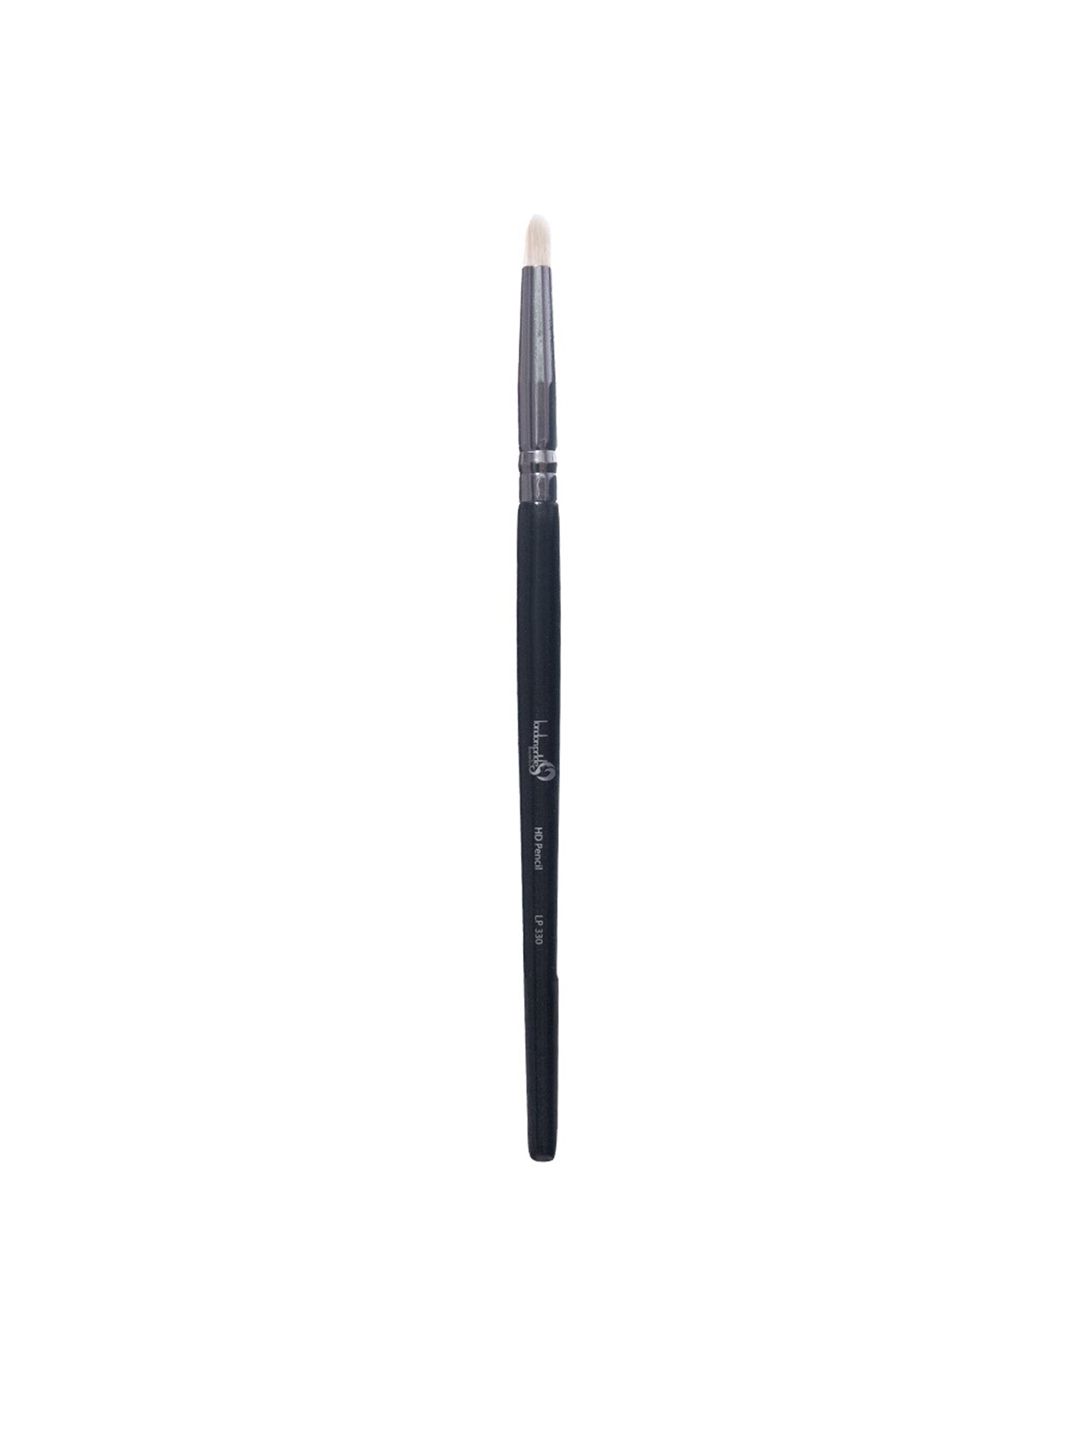 london pride cosmetics HD Eye Pencil Brush LP 330 Price in India